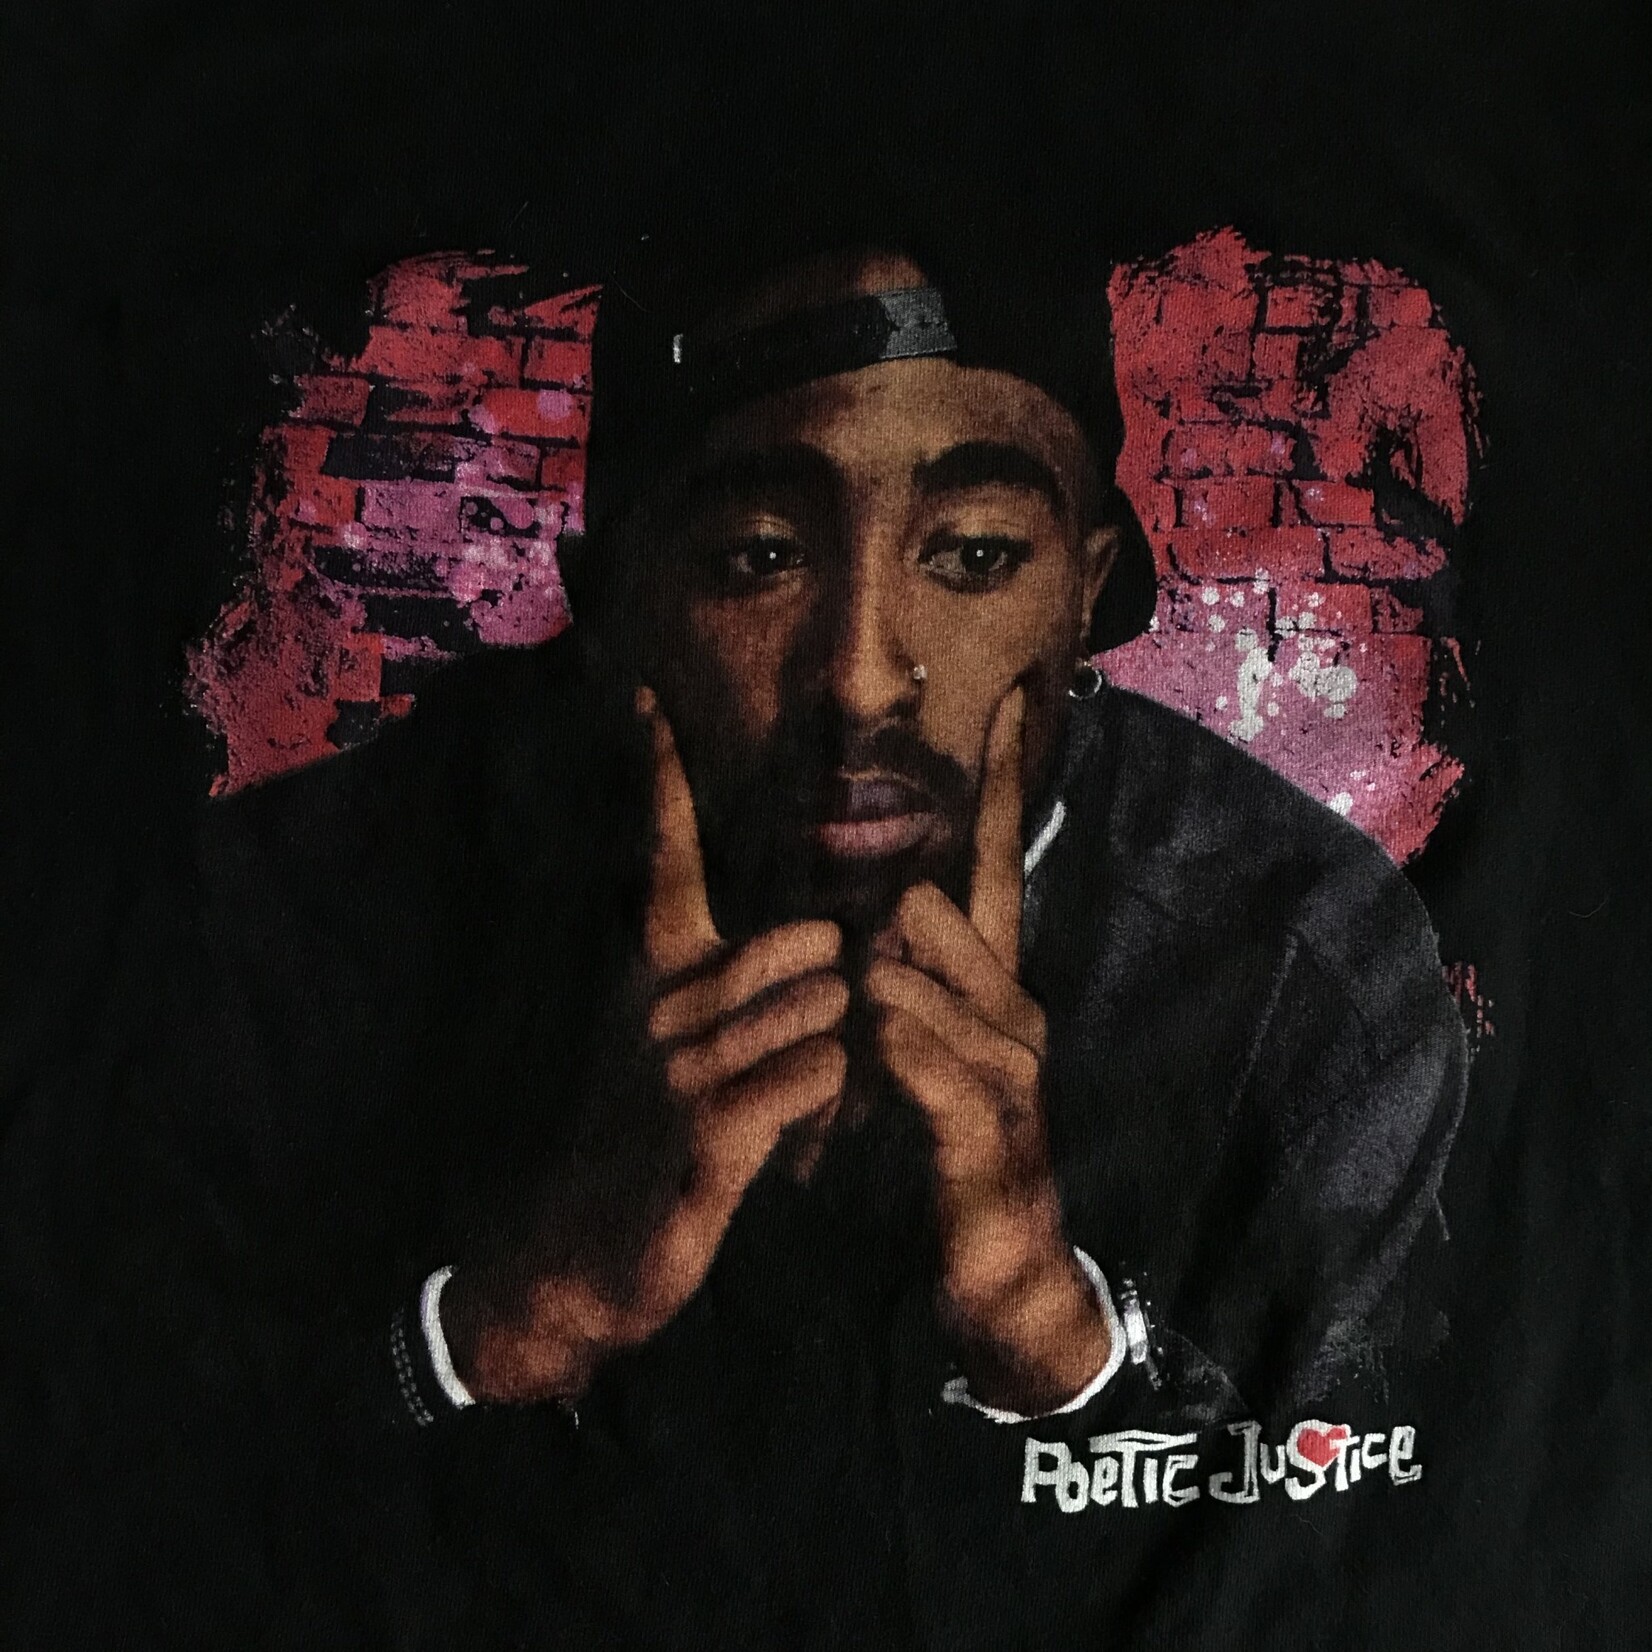 Tupac Shakur - Poetic Justice - T-Shirt Small (USED)